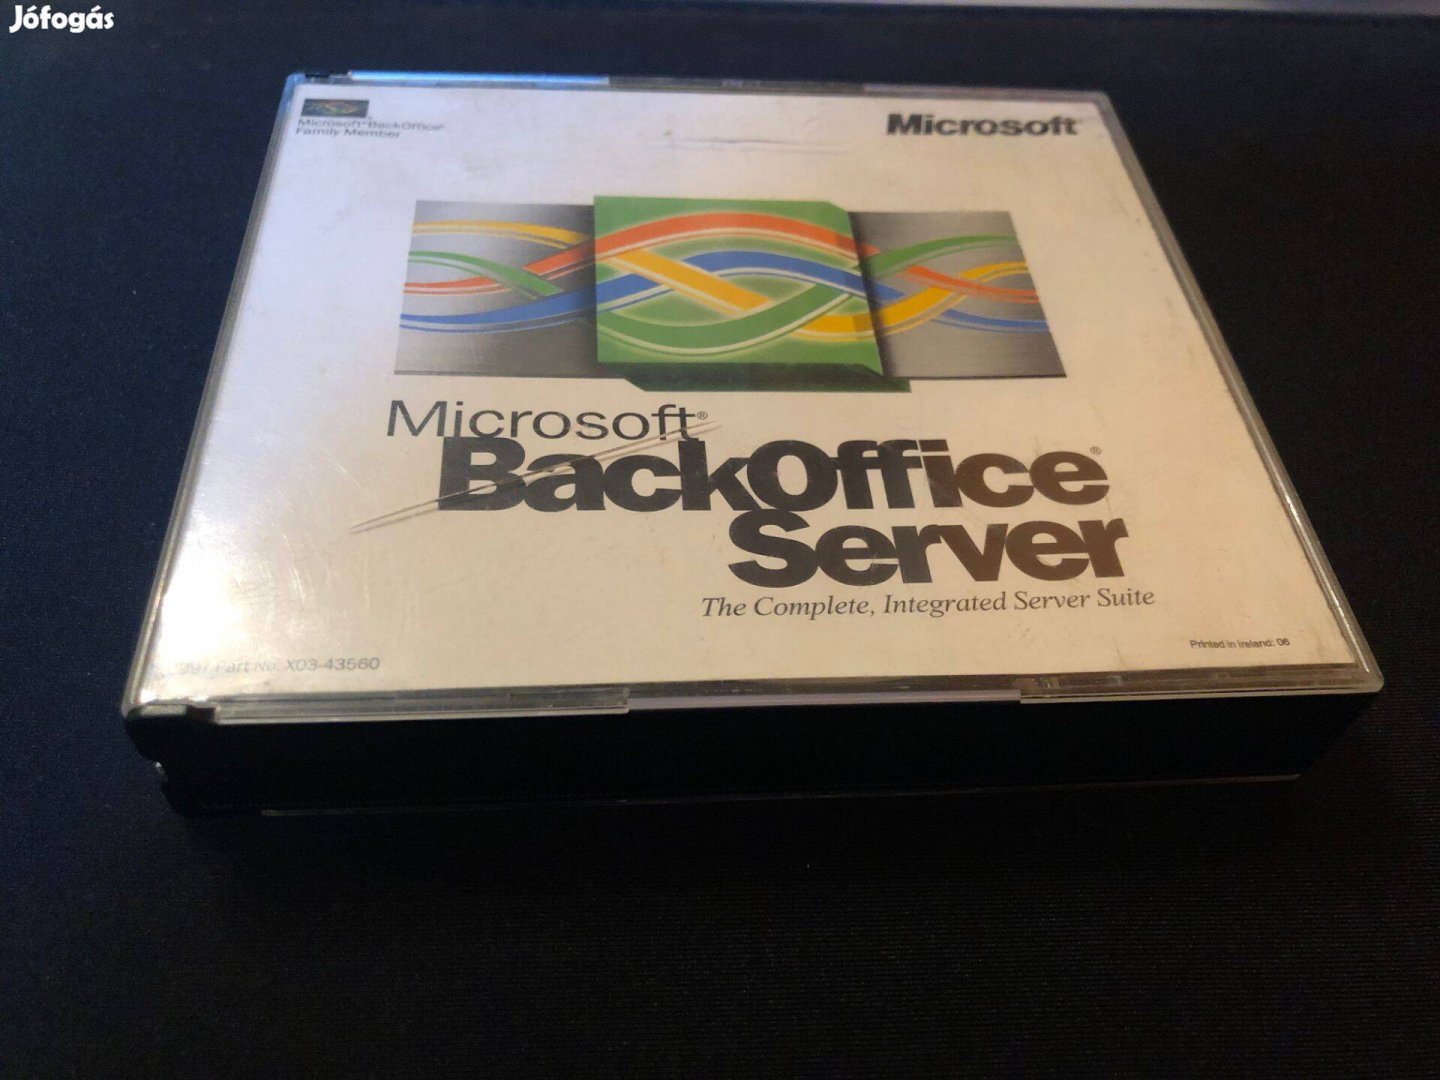 Microsoft Back Office Server 4.0, licensz kulccsal